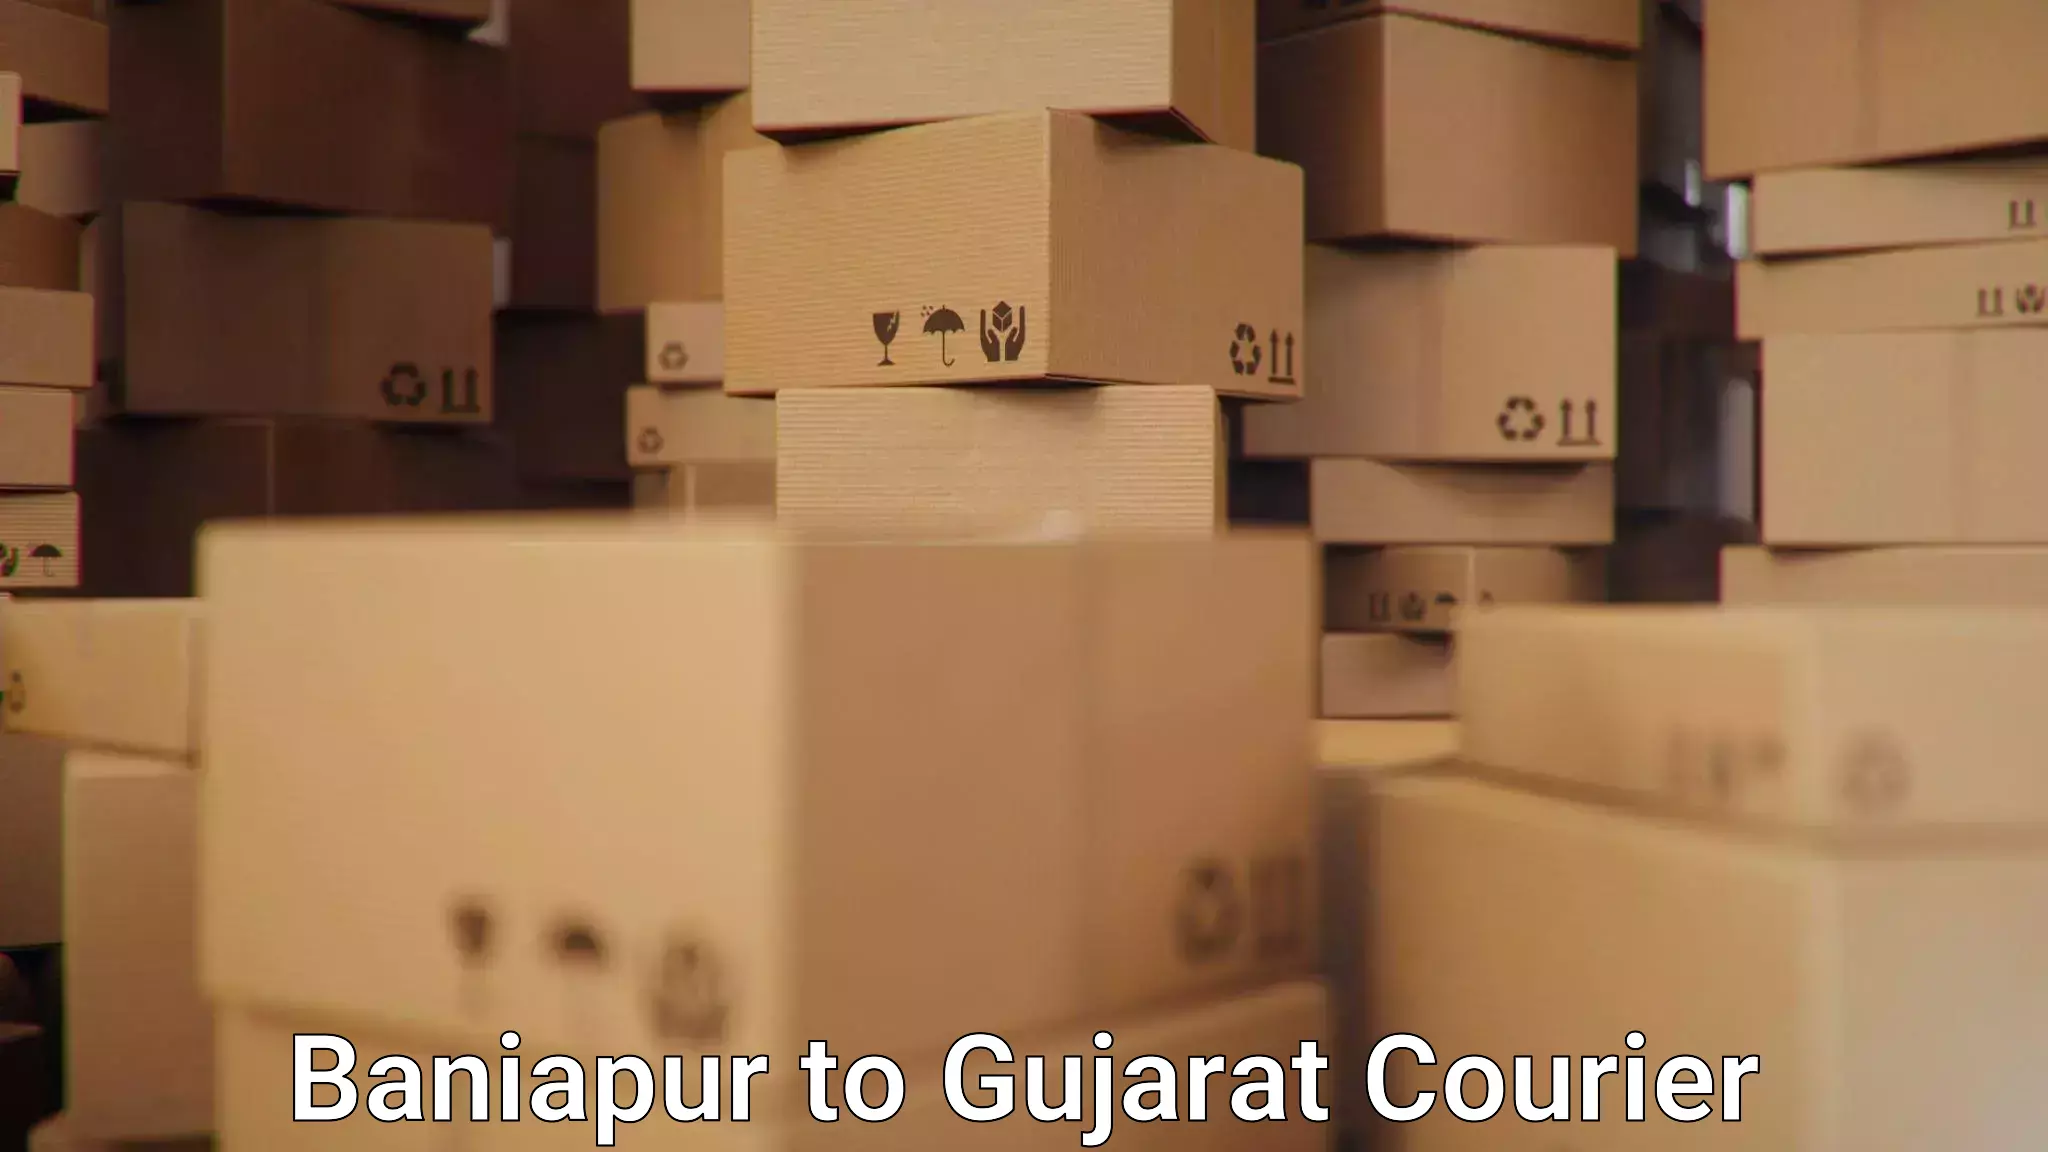 Global courier networks Baniapur to Vatadara